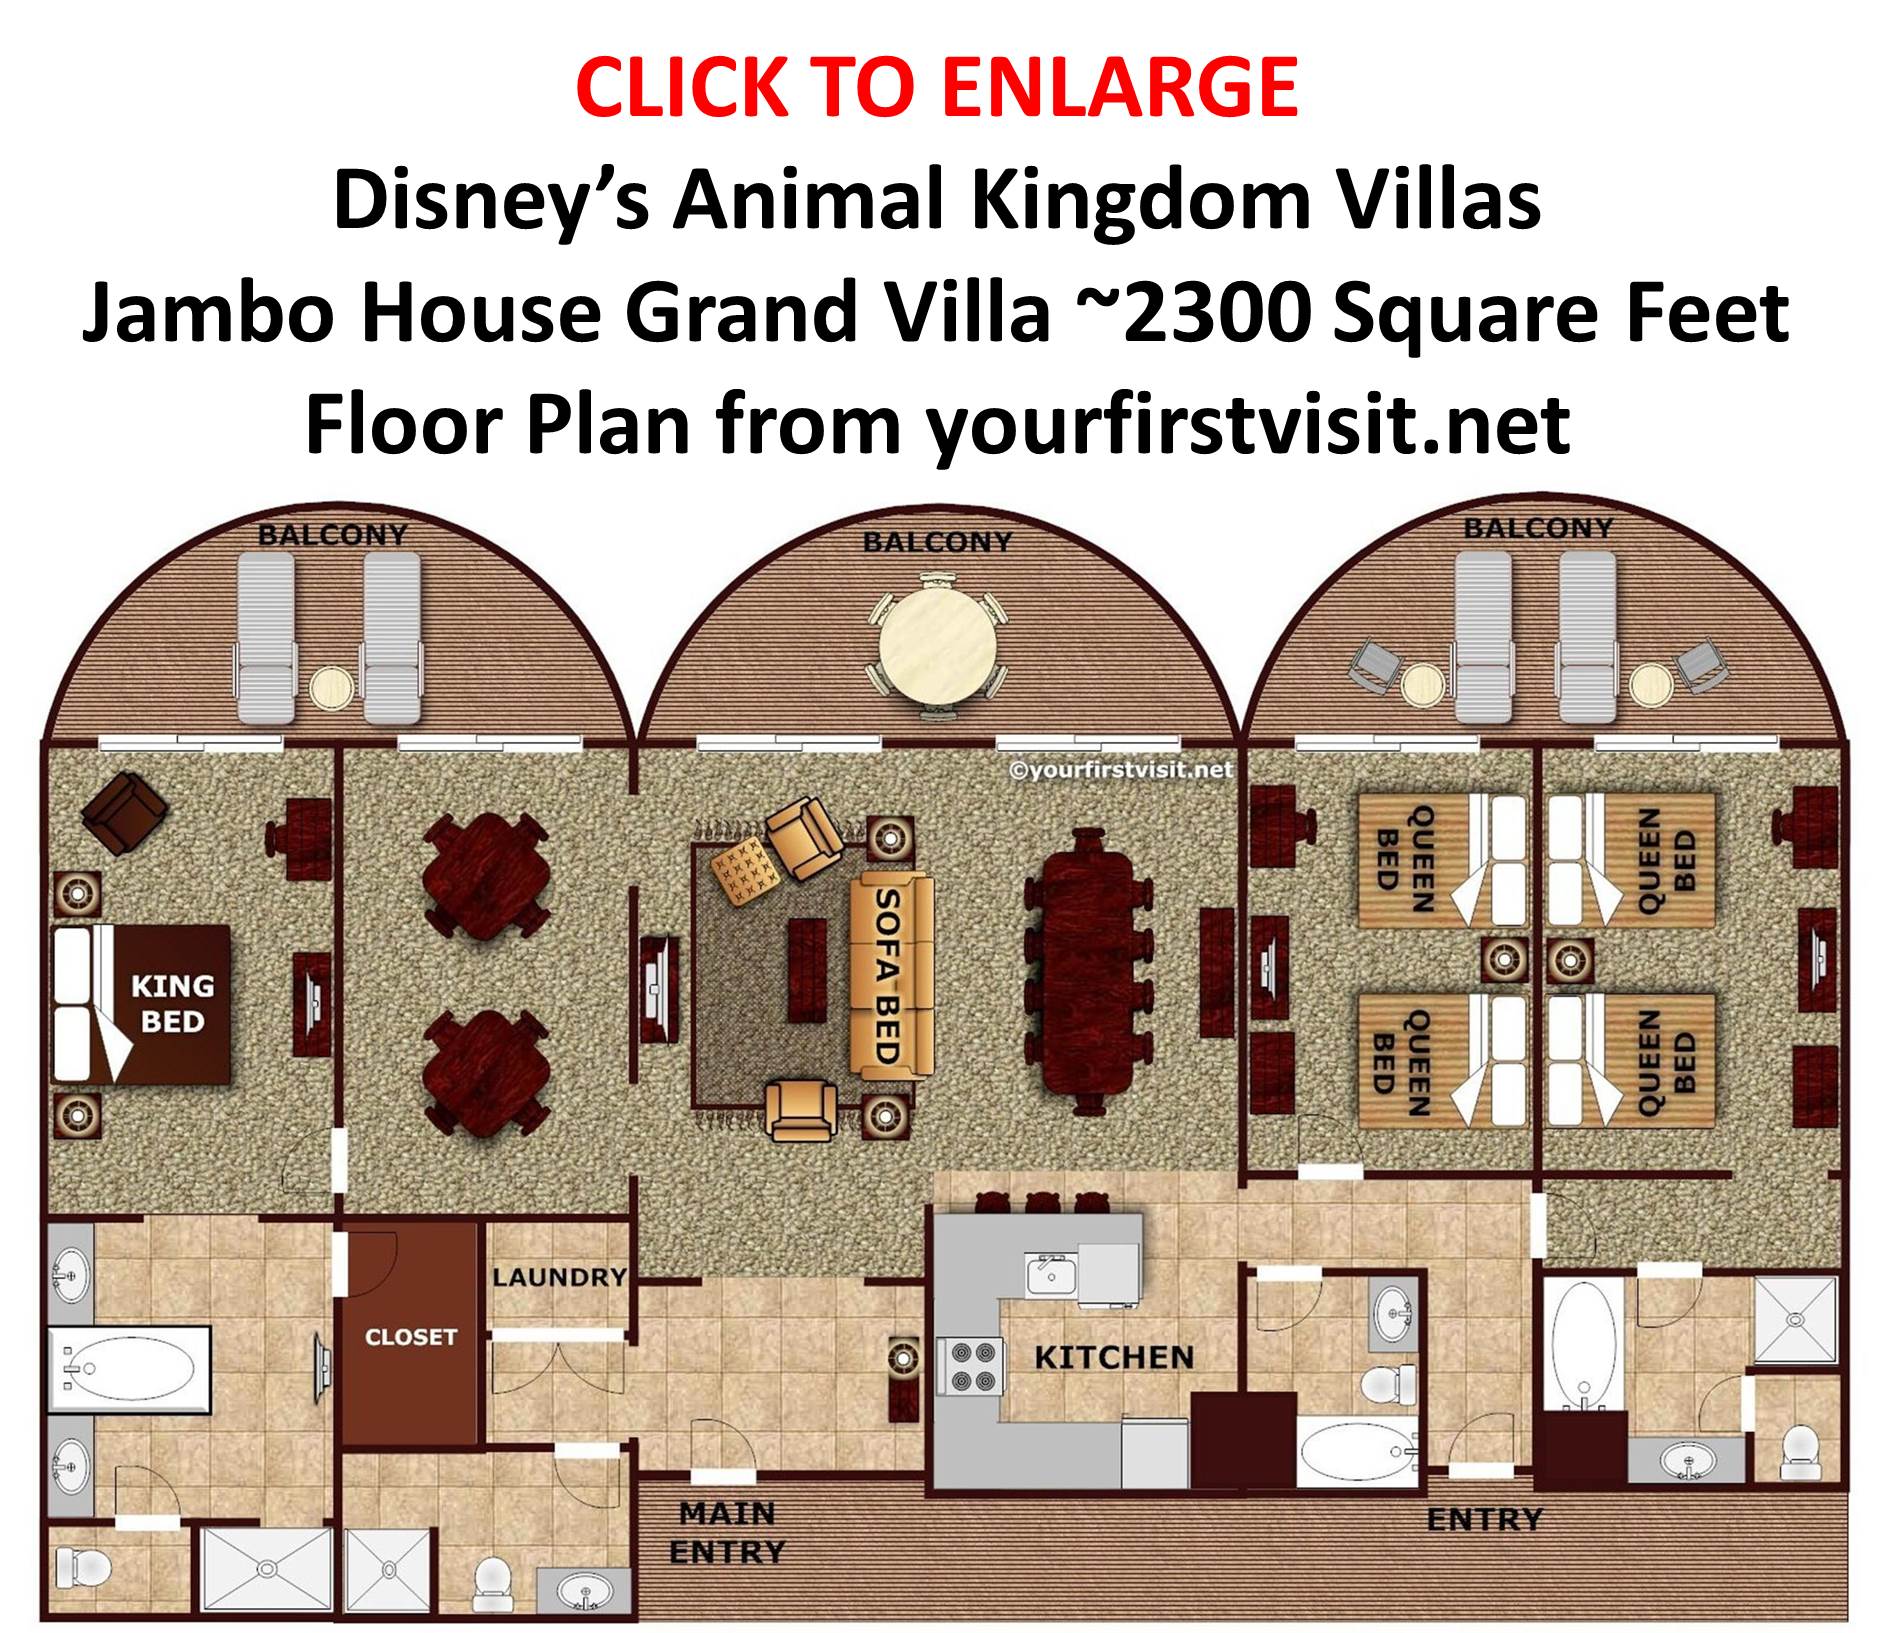 Disney's Jambo House Grand Villa floor plan from yourfisrtvisit.net_